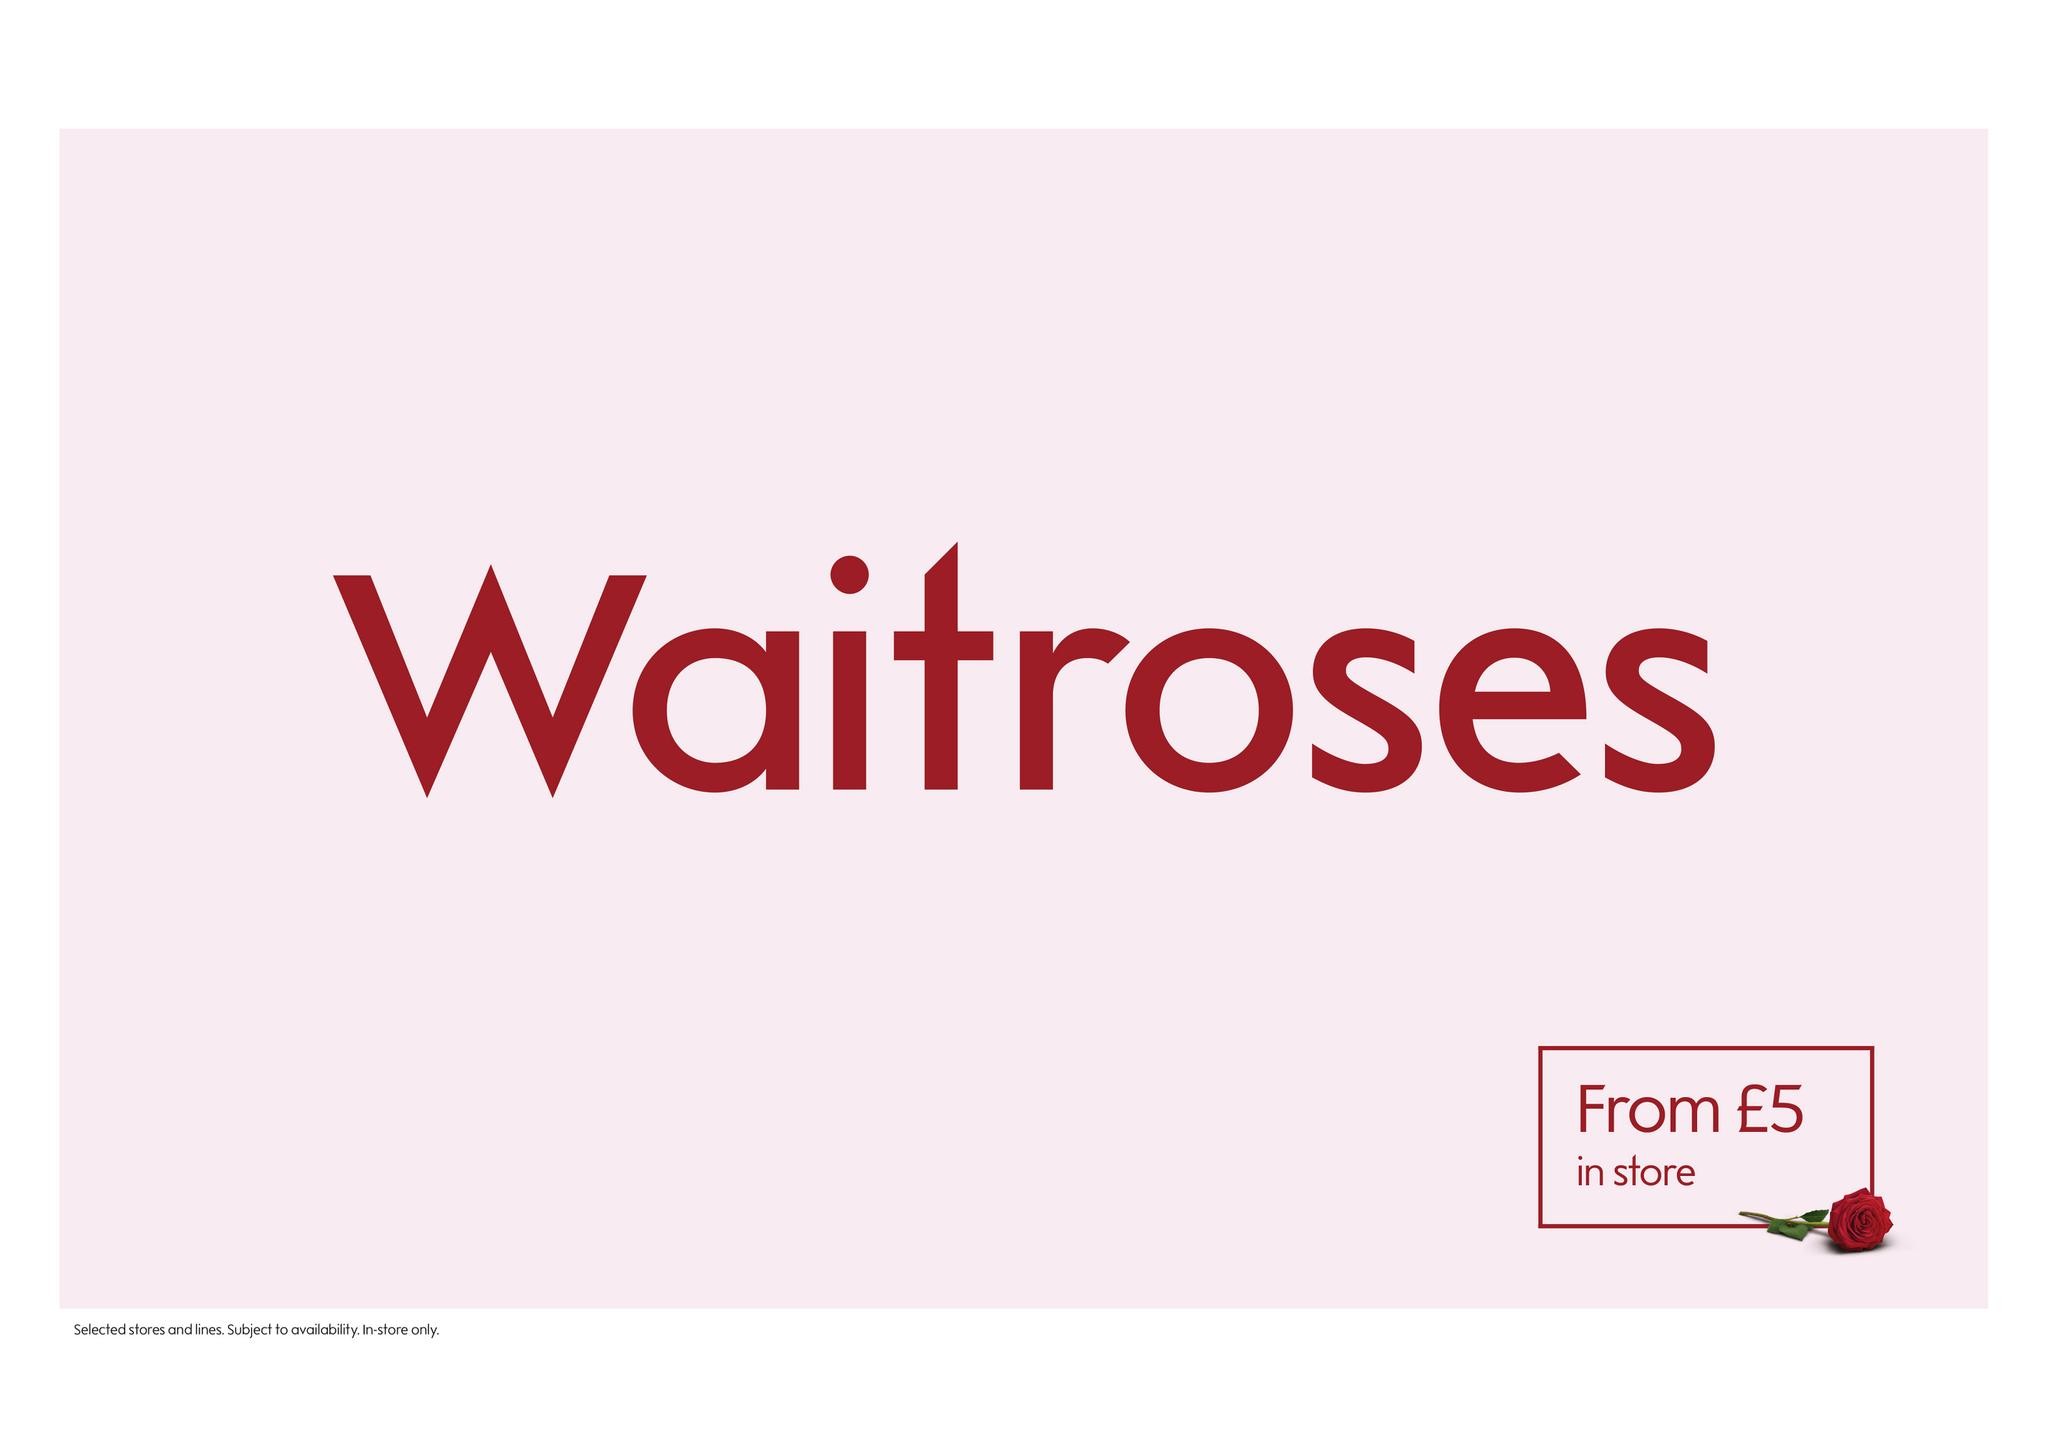 Waitroses